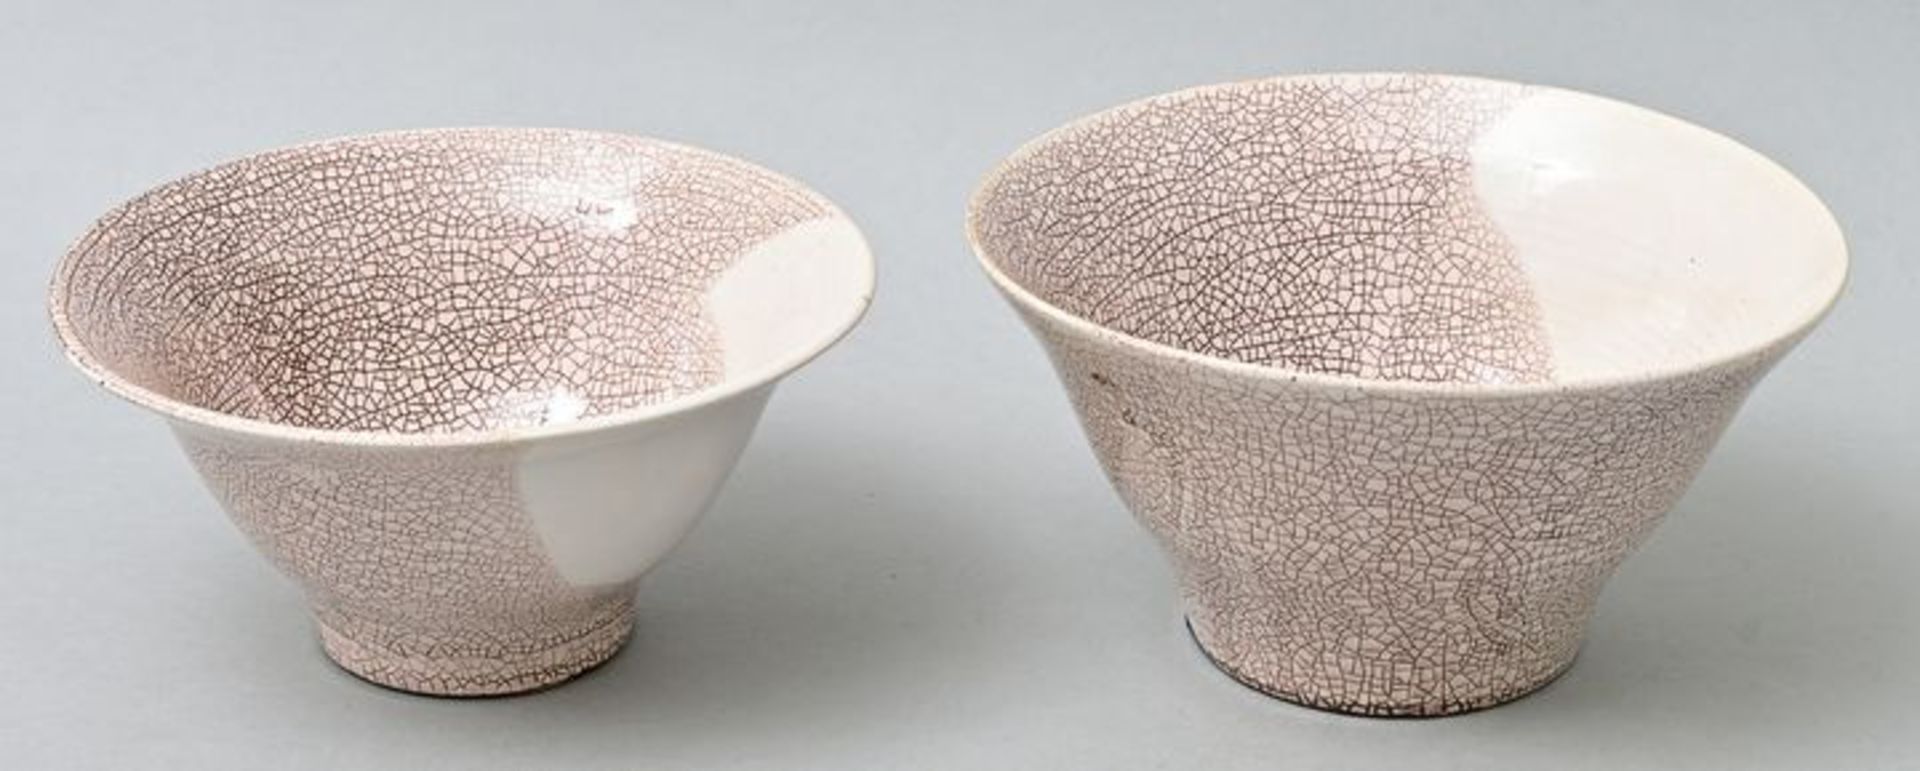 Jutta Löffler: Zwei Schale/ two bowls